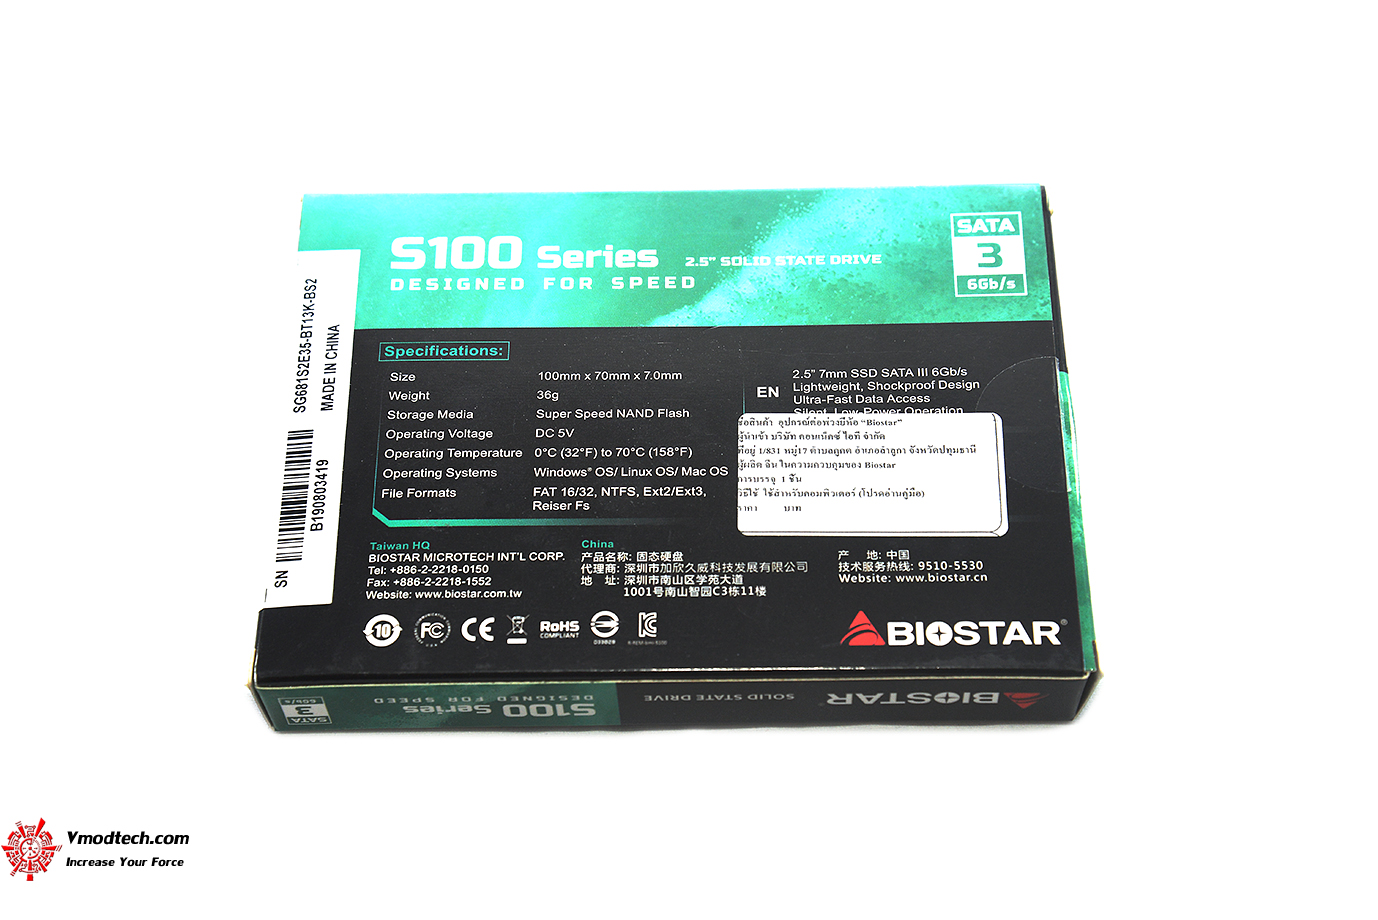 dsc 9903 Biostar SSD S130 512GB Review